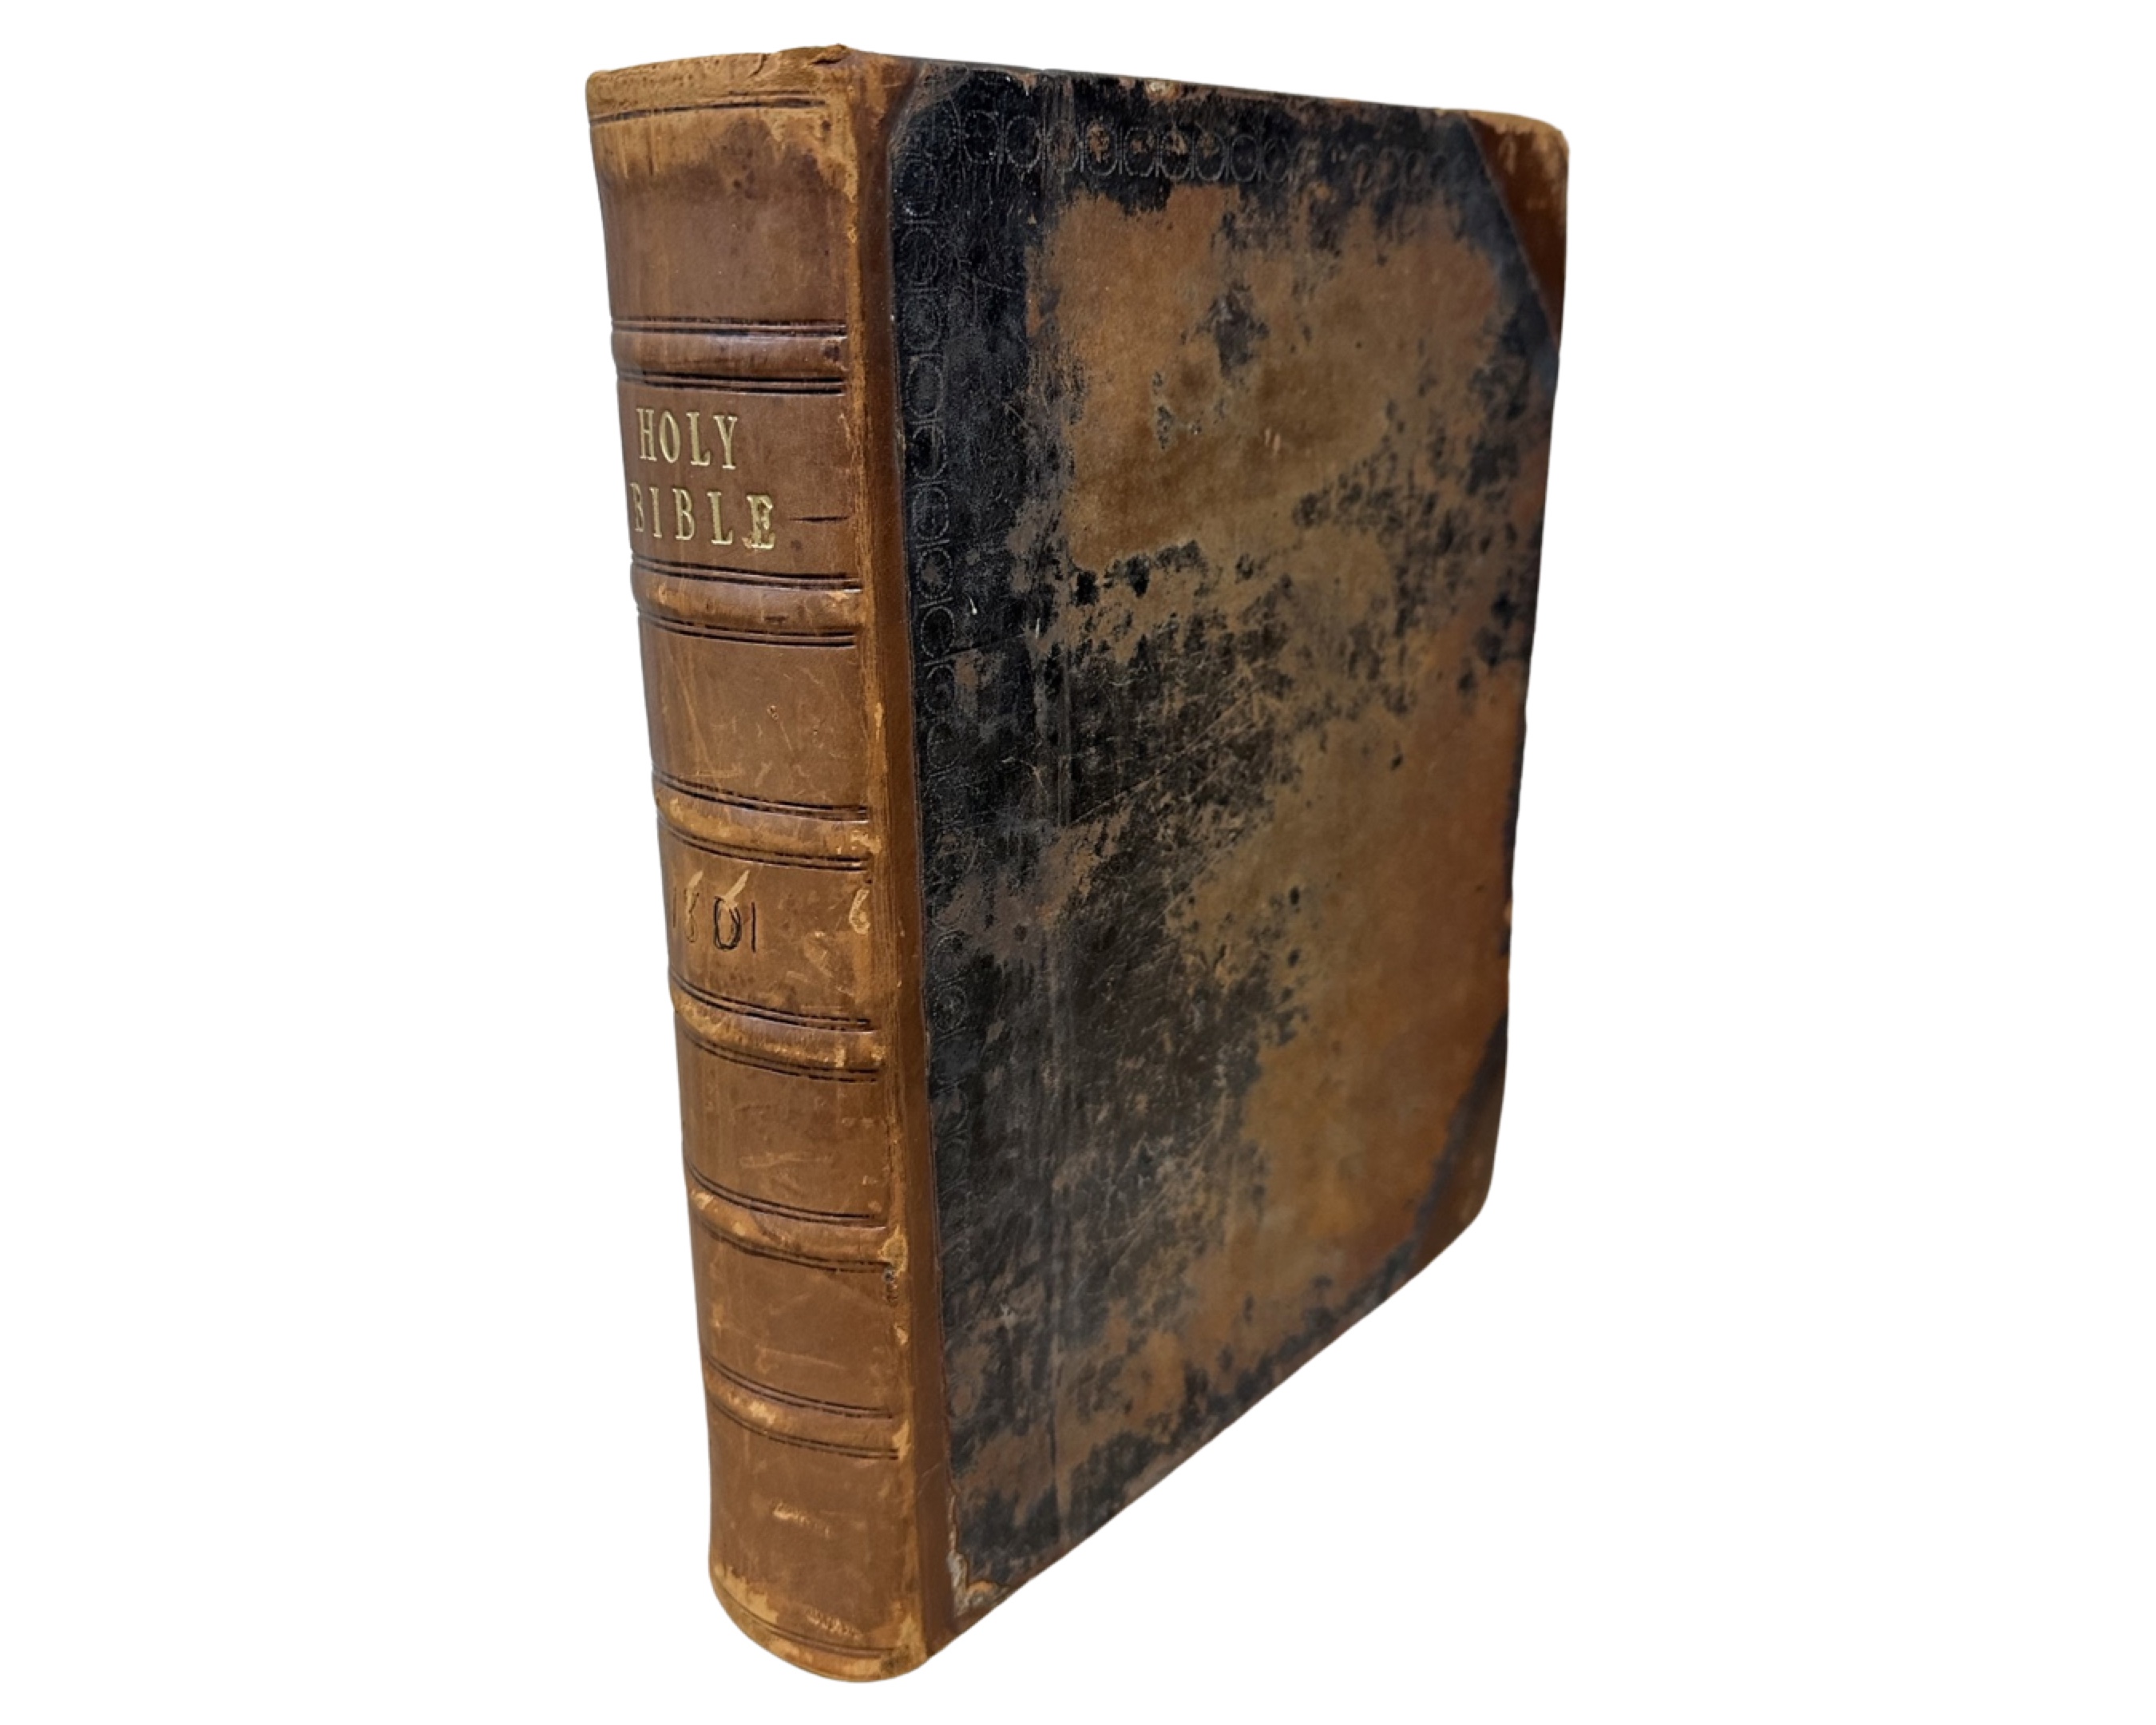 An 18th century leather bound Holy Bible, printed by Alexander Kincaid, Edinburgh 1762,